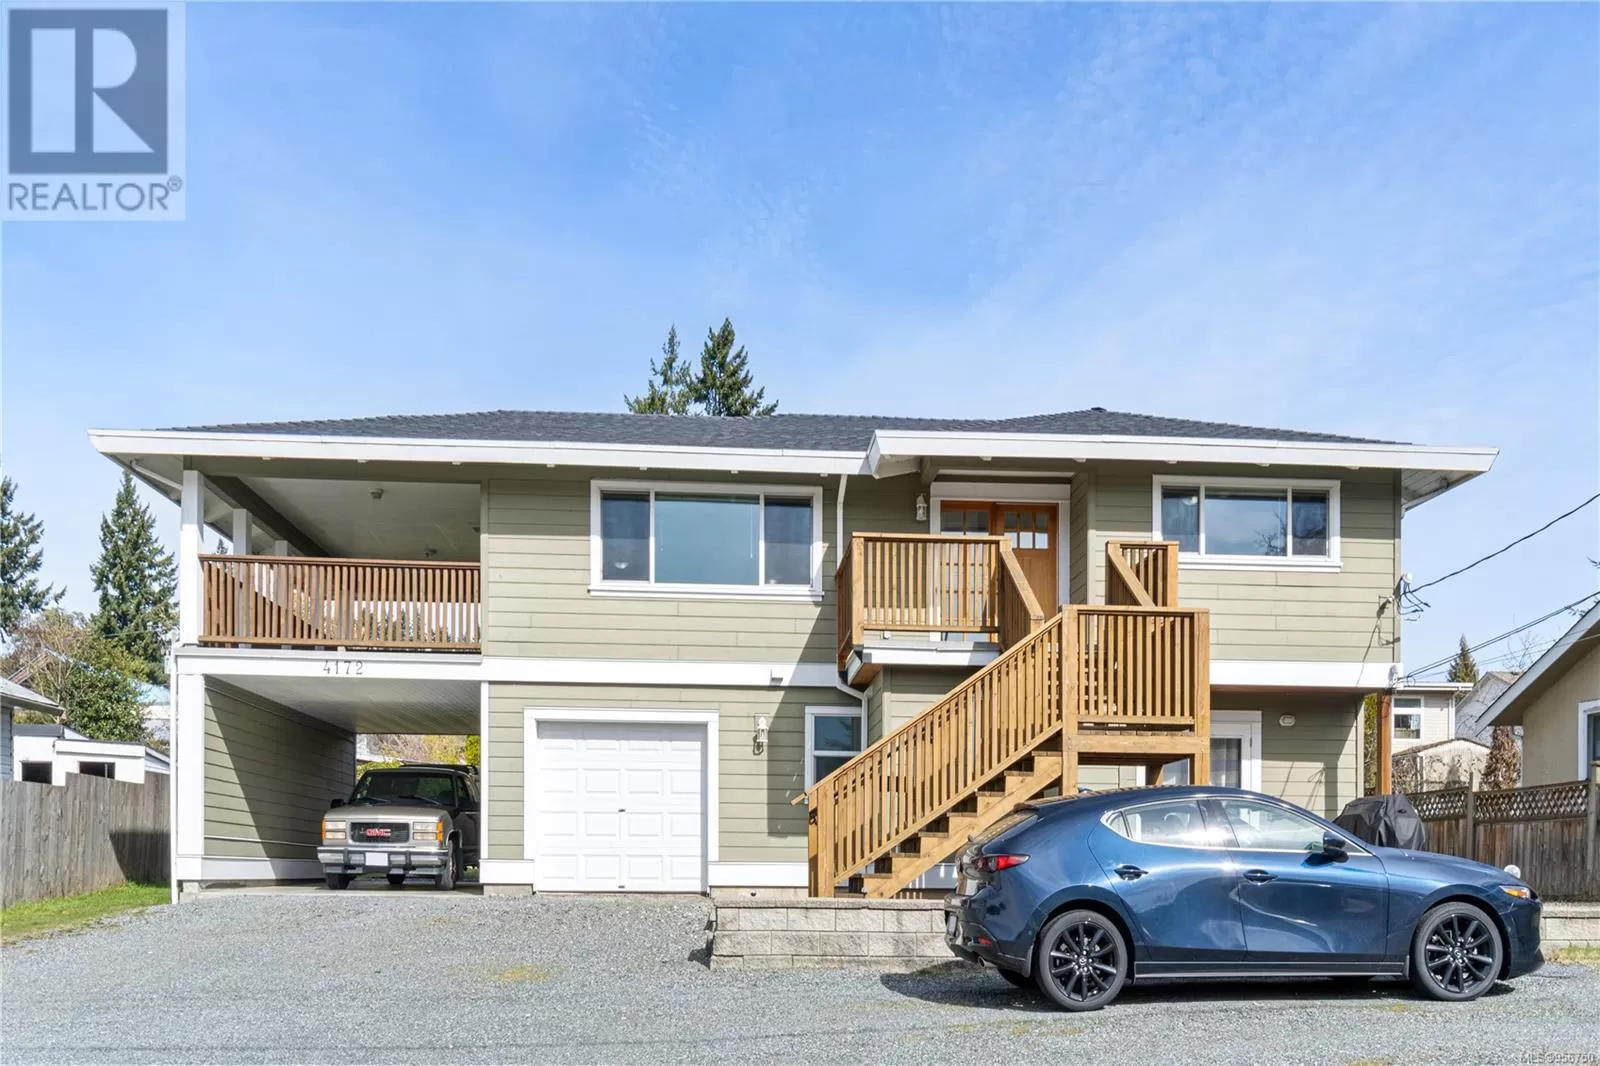 House for rent: 4172 Corunna Ave, Nanaimo, British Columbia V9T 1Z2